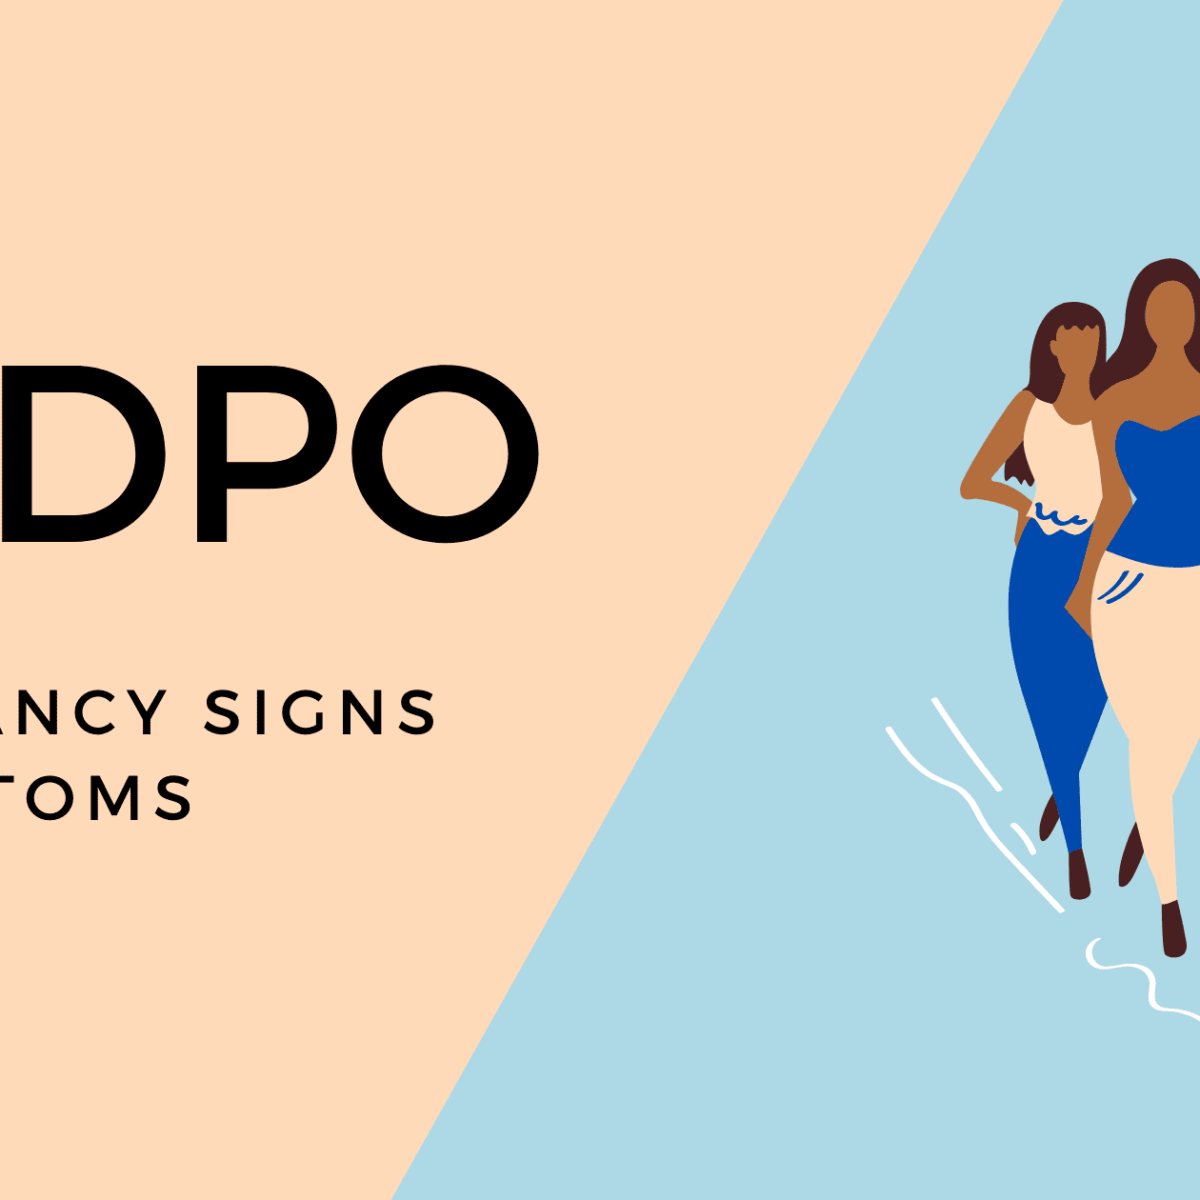 13 DPO: Pregnancy Signs and Symptoms